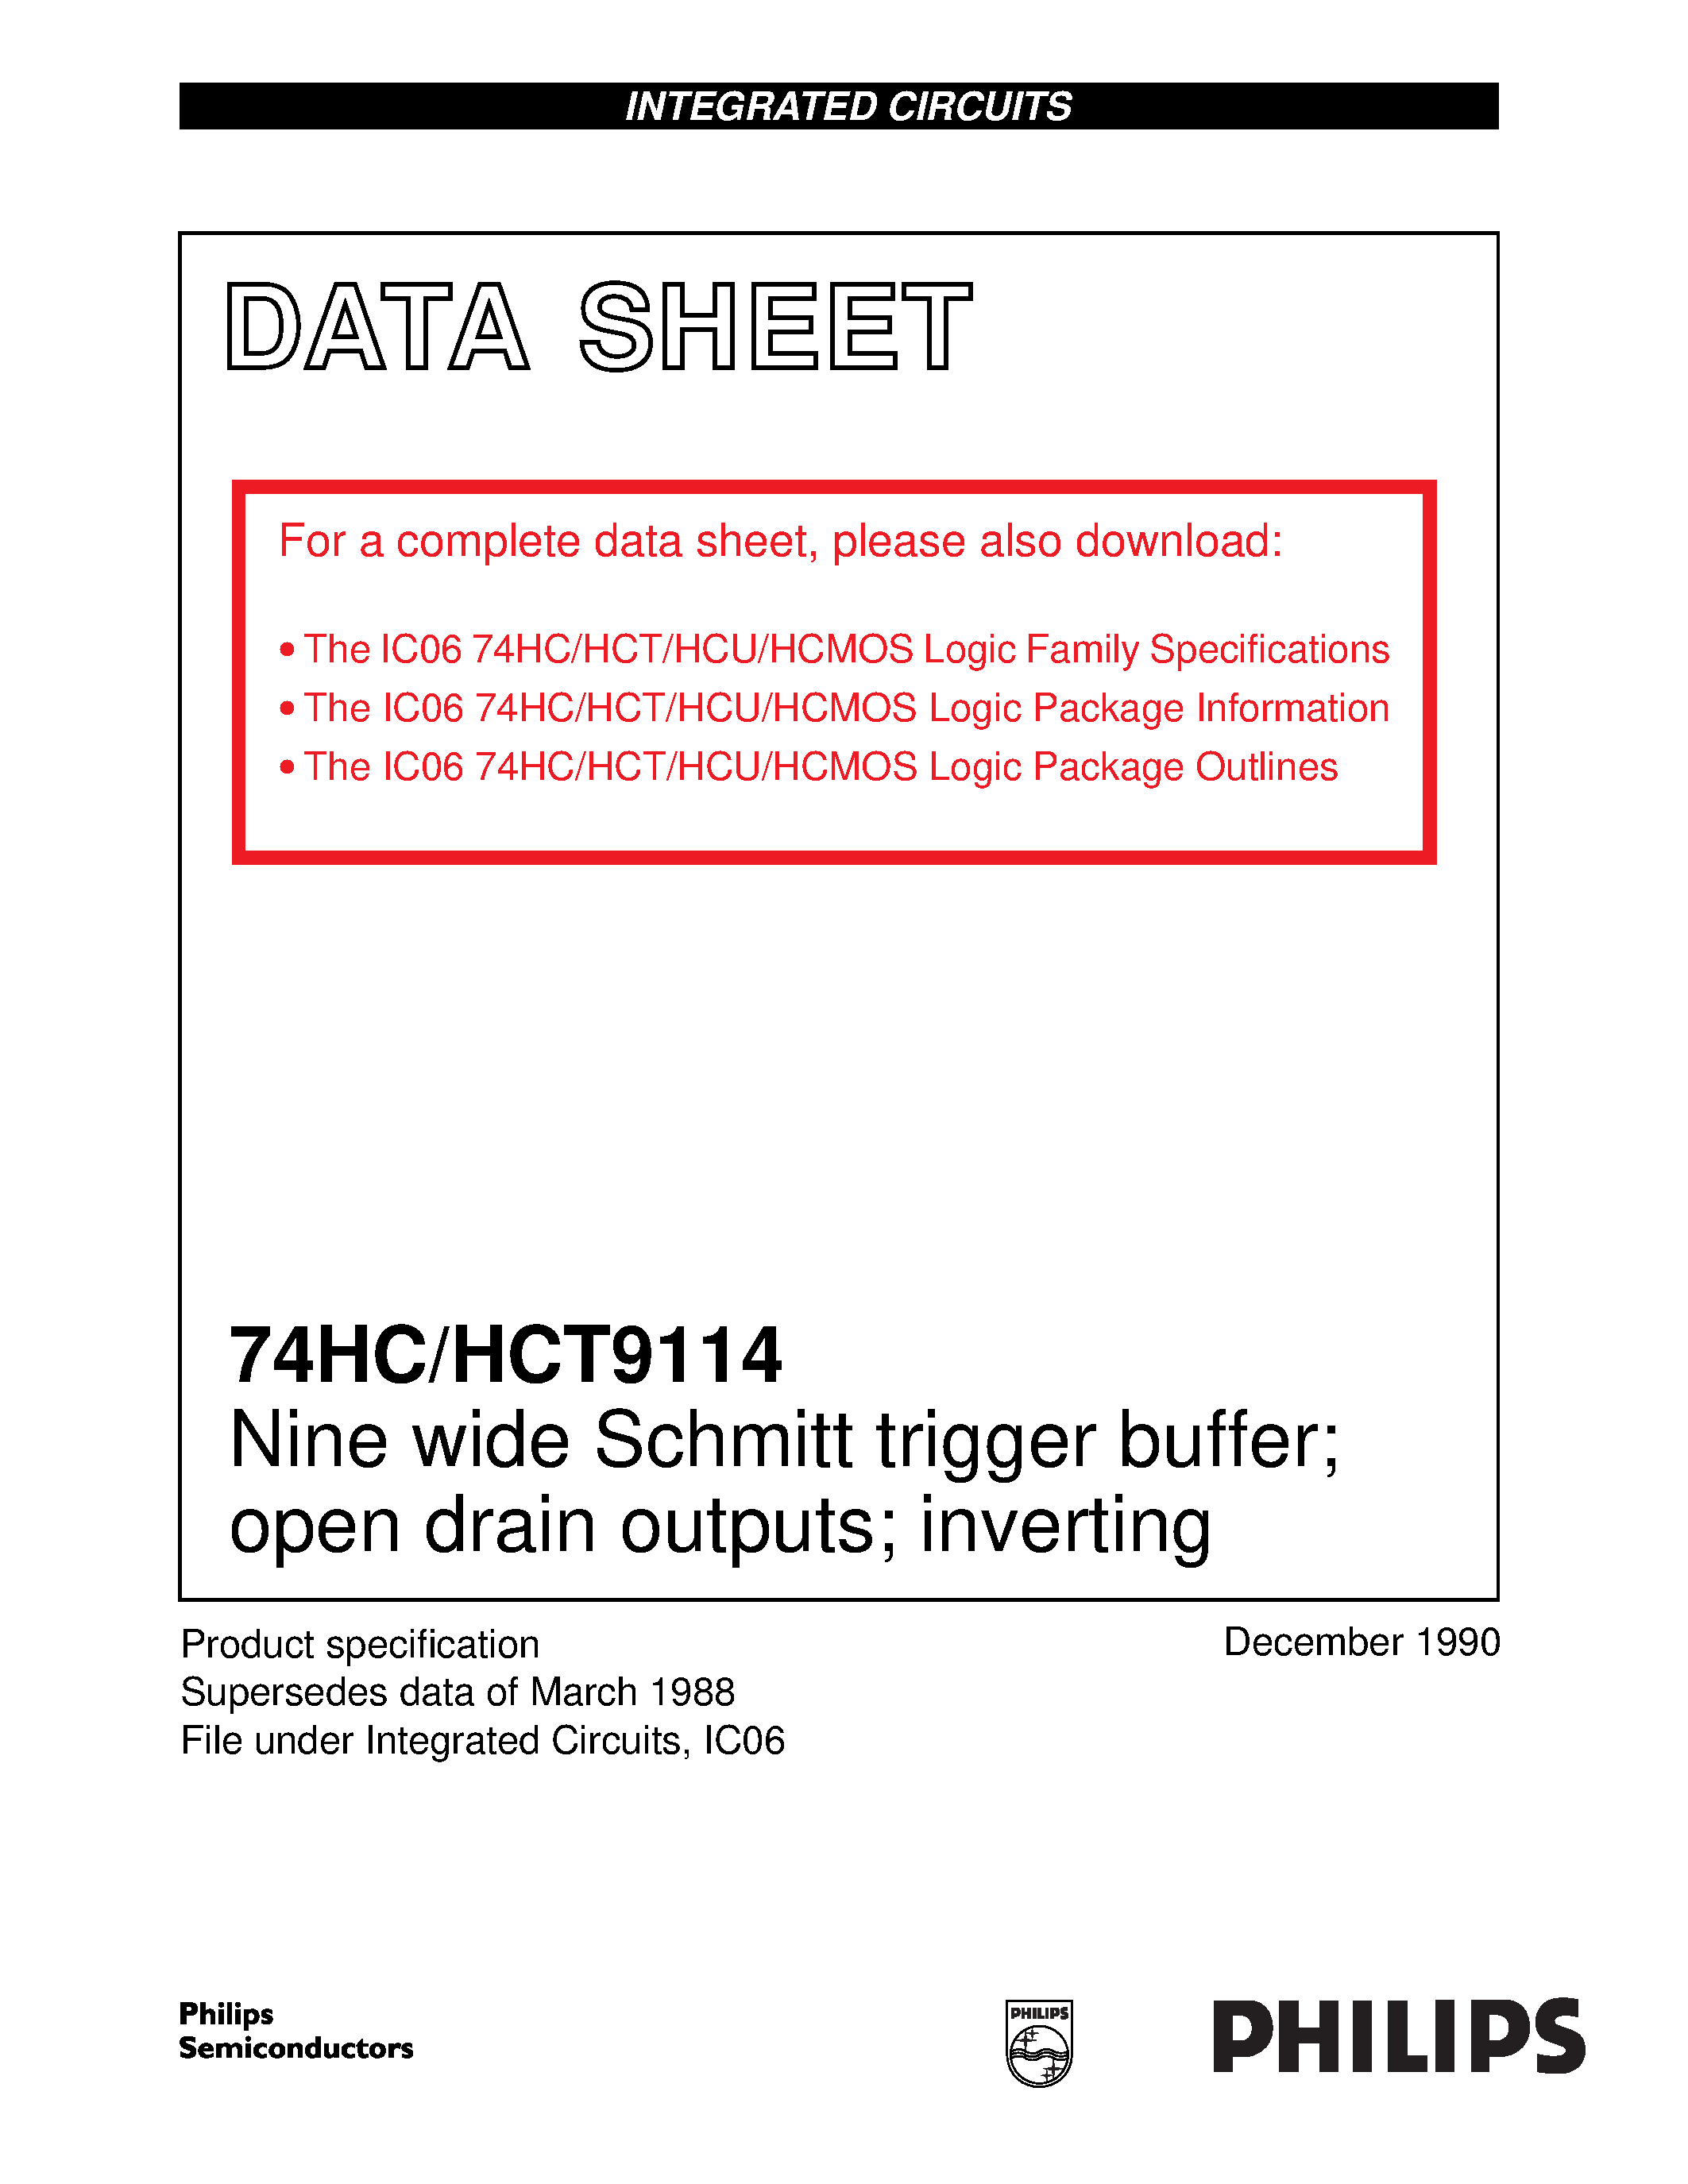 Даташит 74HCT9114 - Nine wide Schmitt trigger buffer; open drain outputs; inverting страница 1